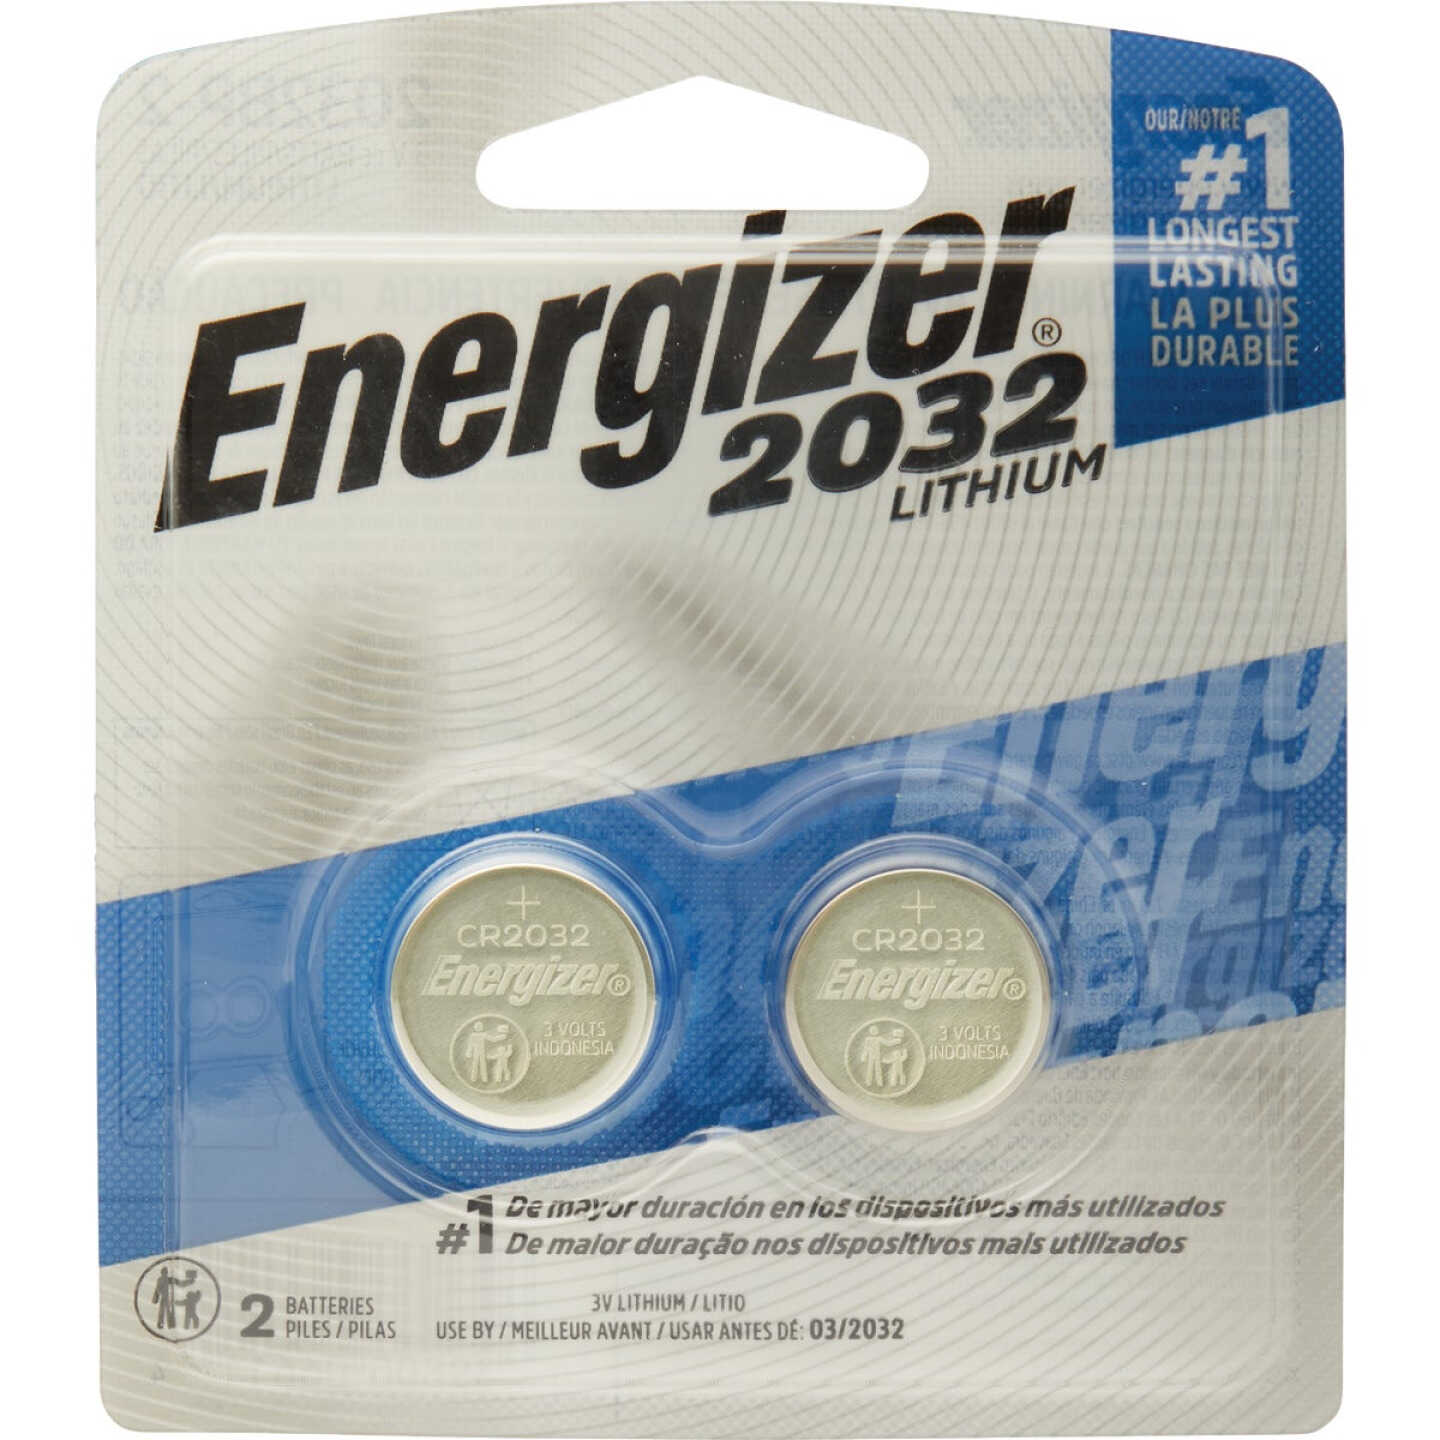 Energizer 2032 Lithium Battery - 2 Pk